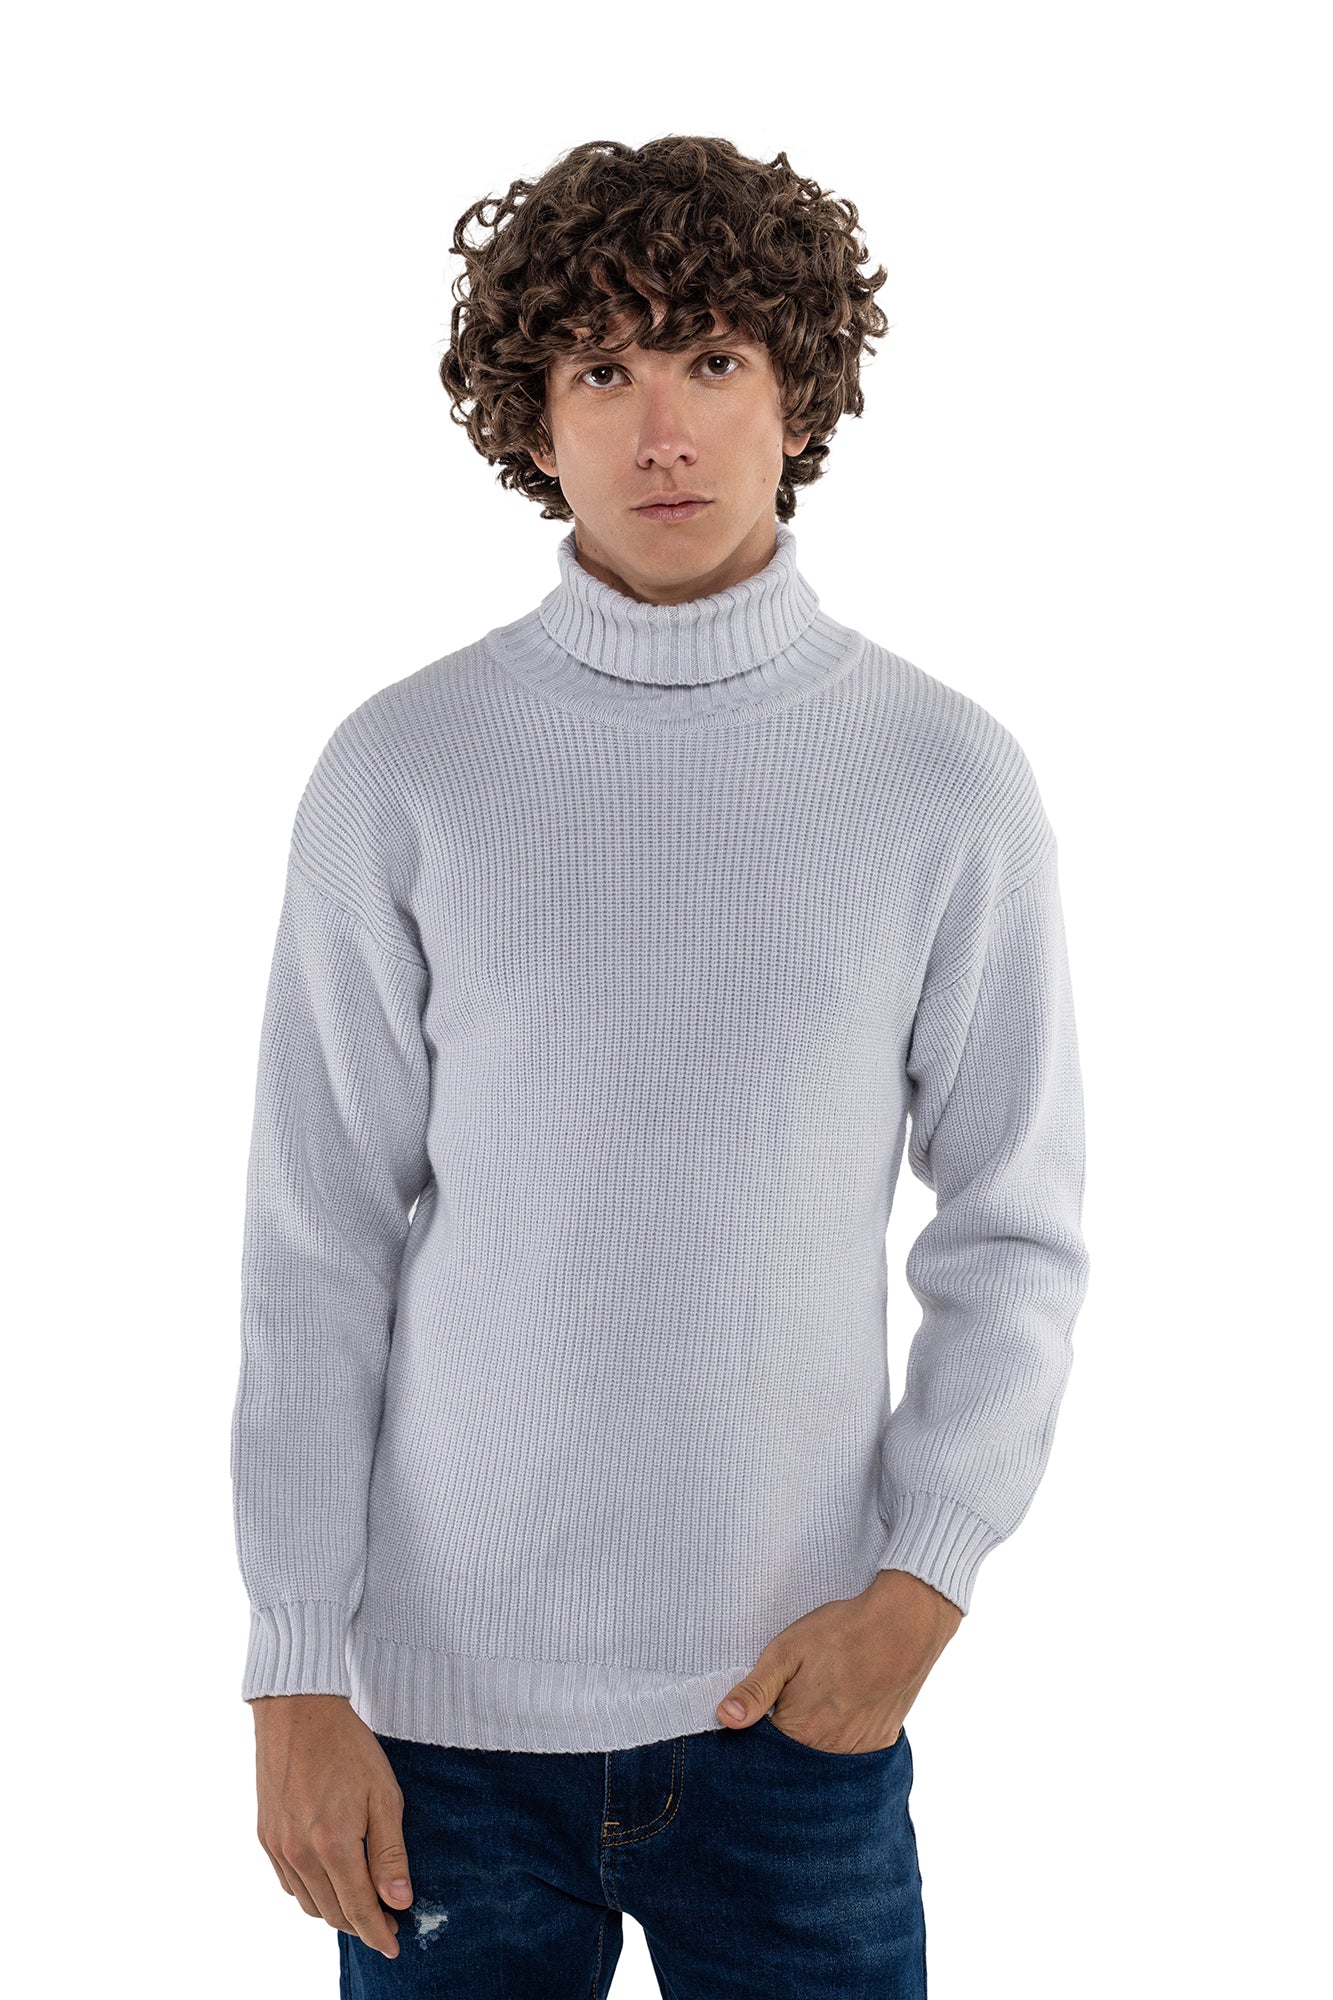 Sweater Cuello Alto Para hombre